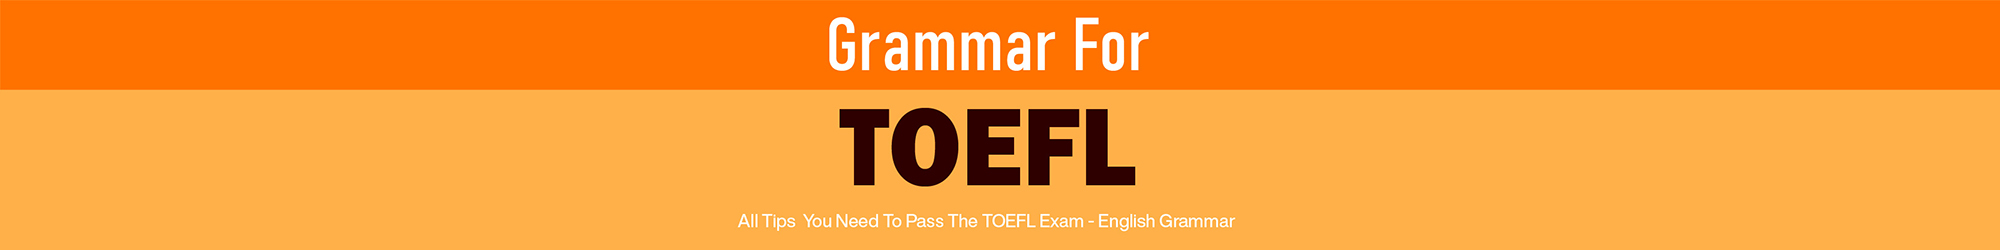 GRAMMAR FOR TOEFL TEST banner